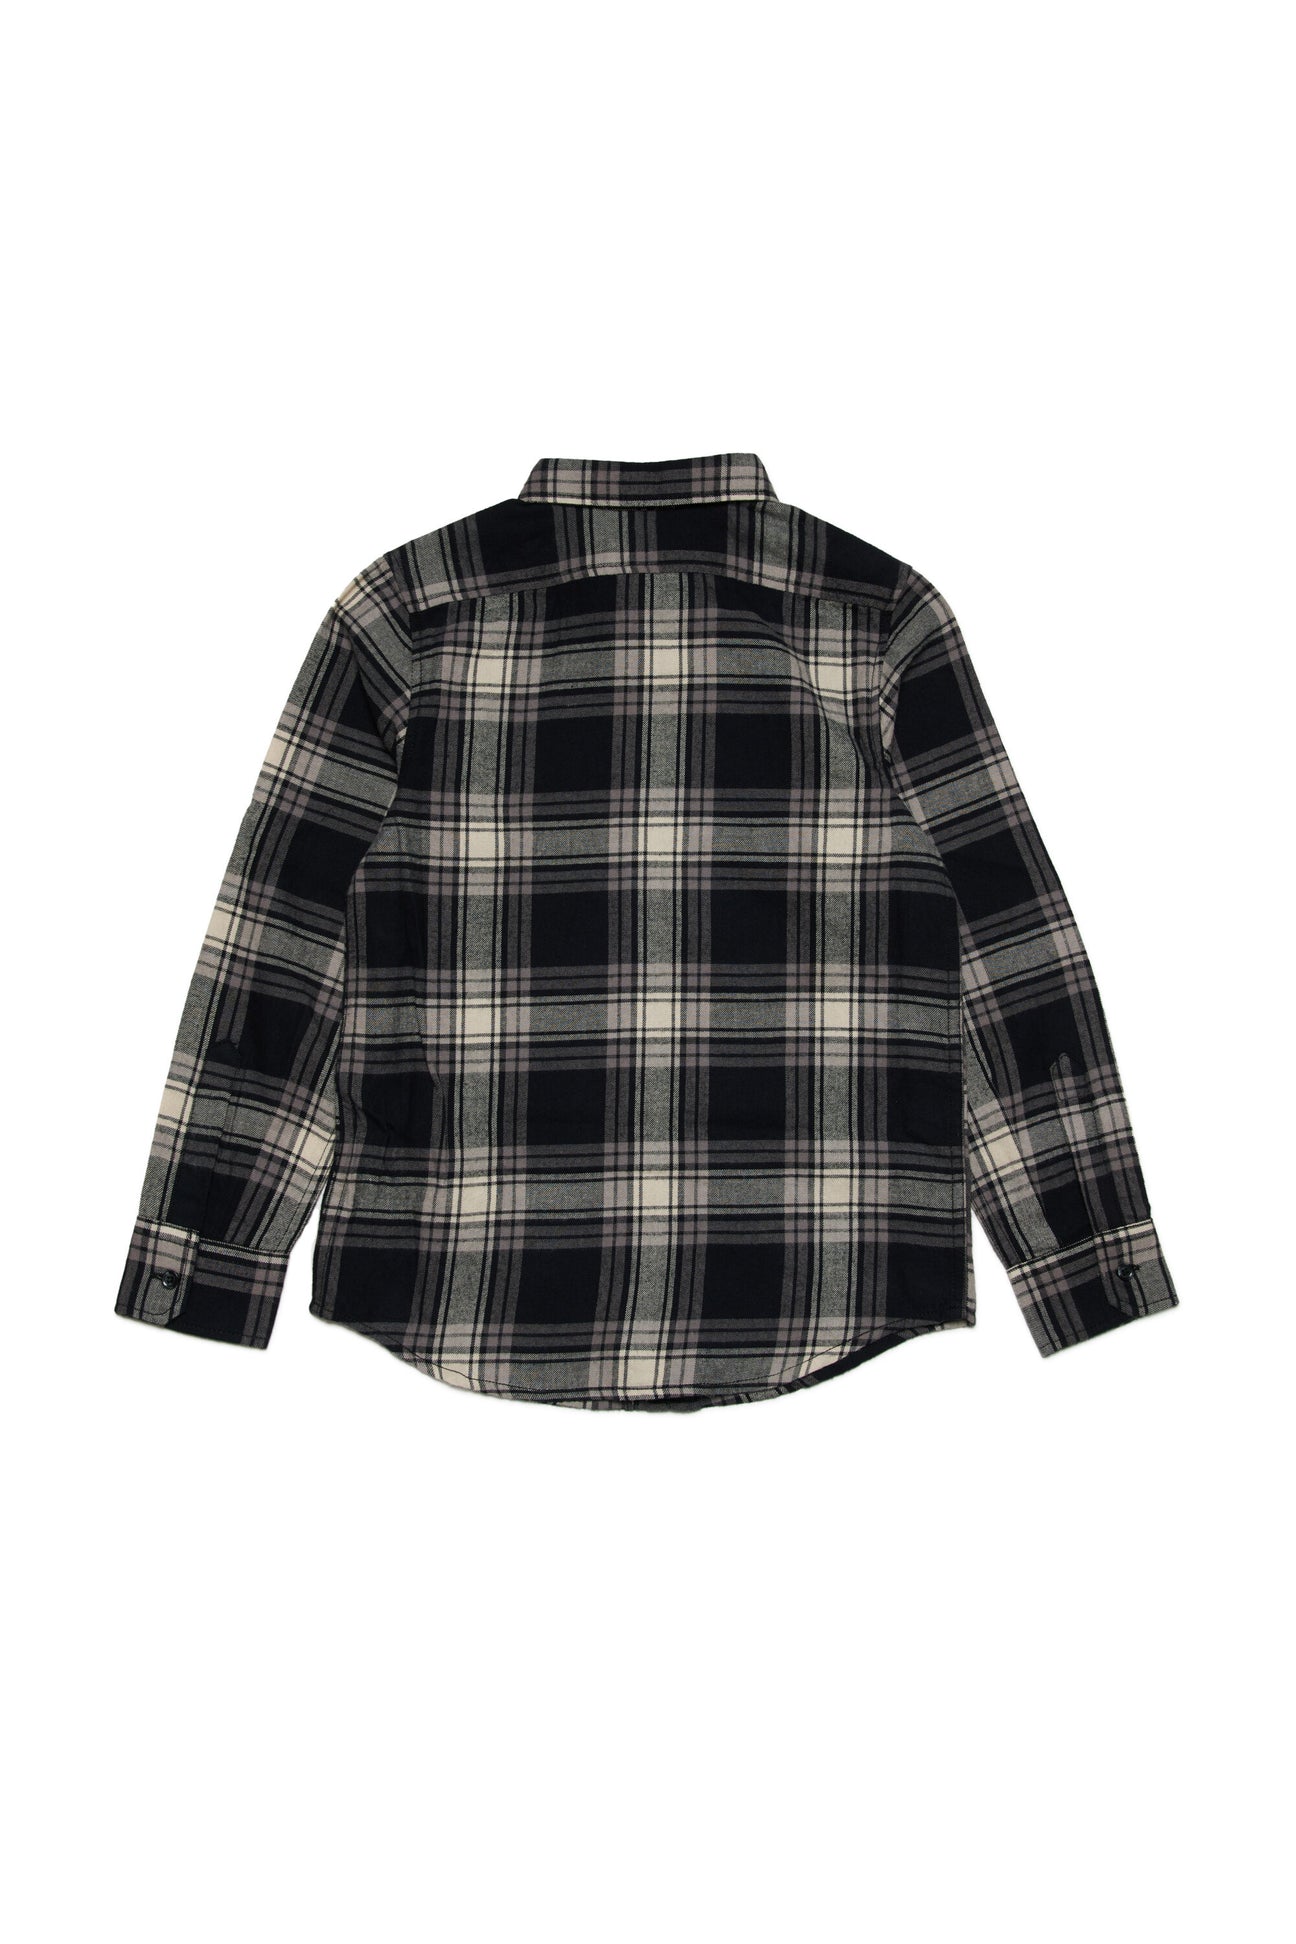 Plaid flannel shirt with Oval D logo Plaid flannel shirt with Oval D logo